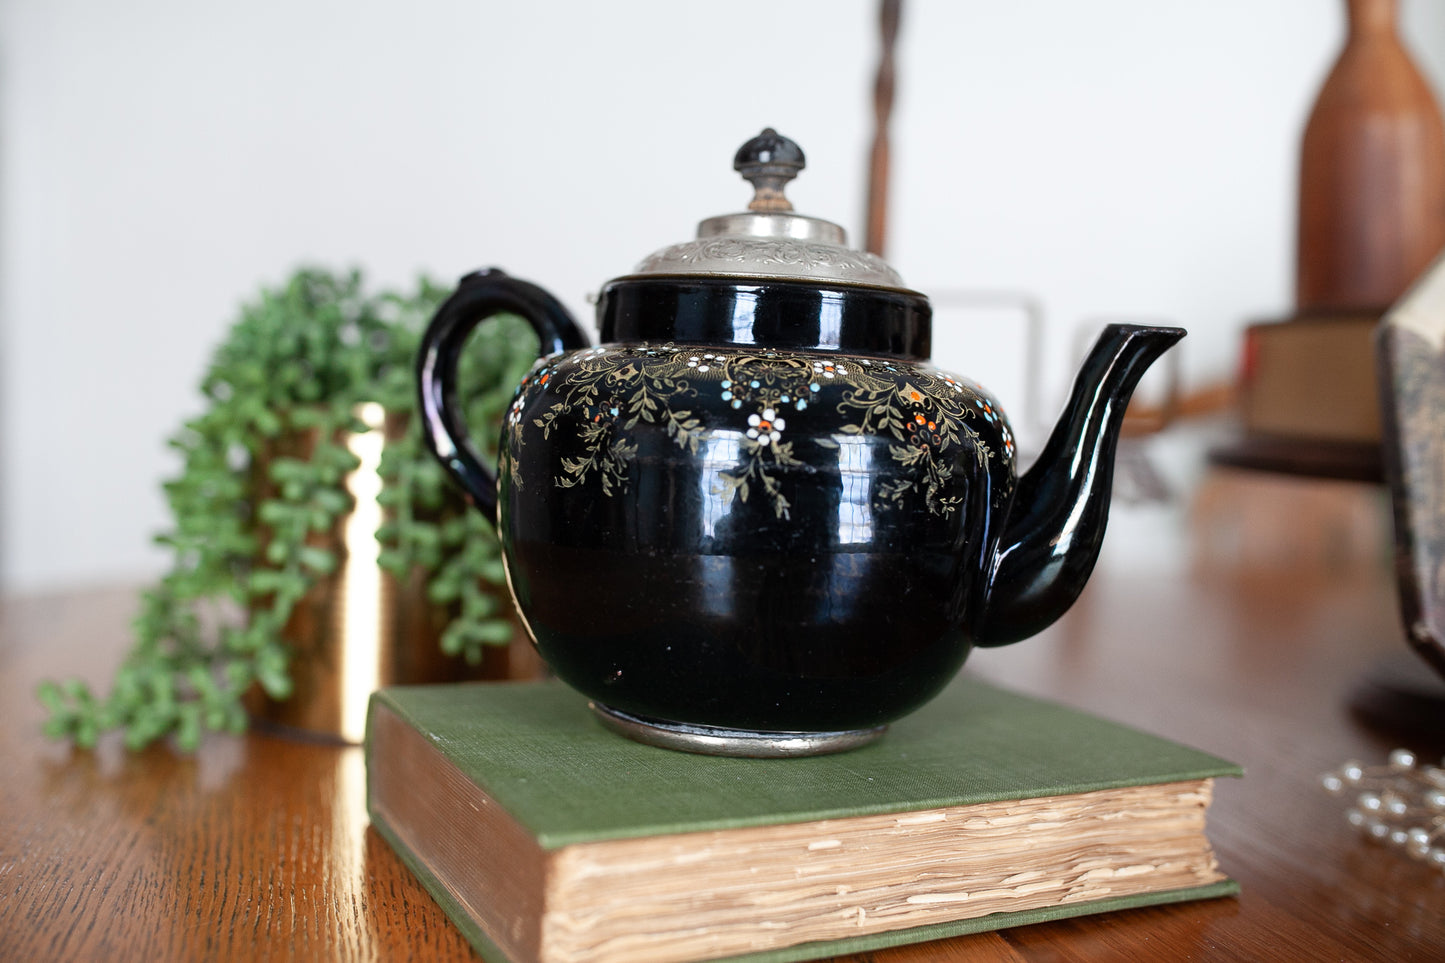 Antique Teapot- Manning Bowman Teapot -England-Burslem England Alexandra Pottery Teapot No 37 Handpainted 1895